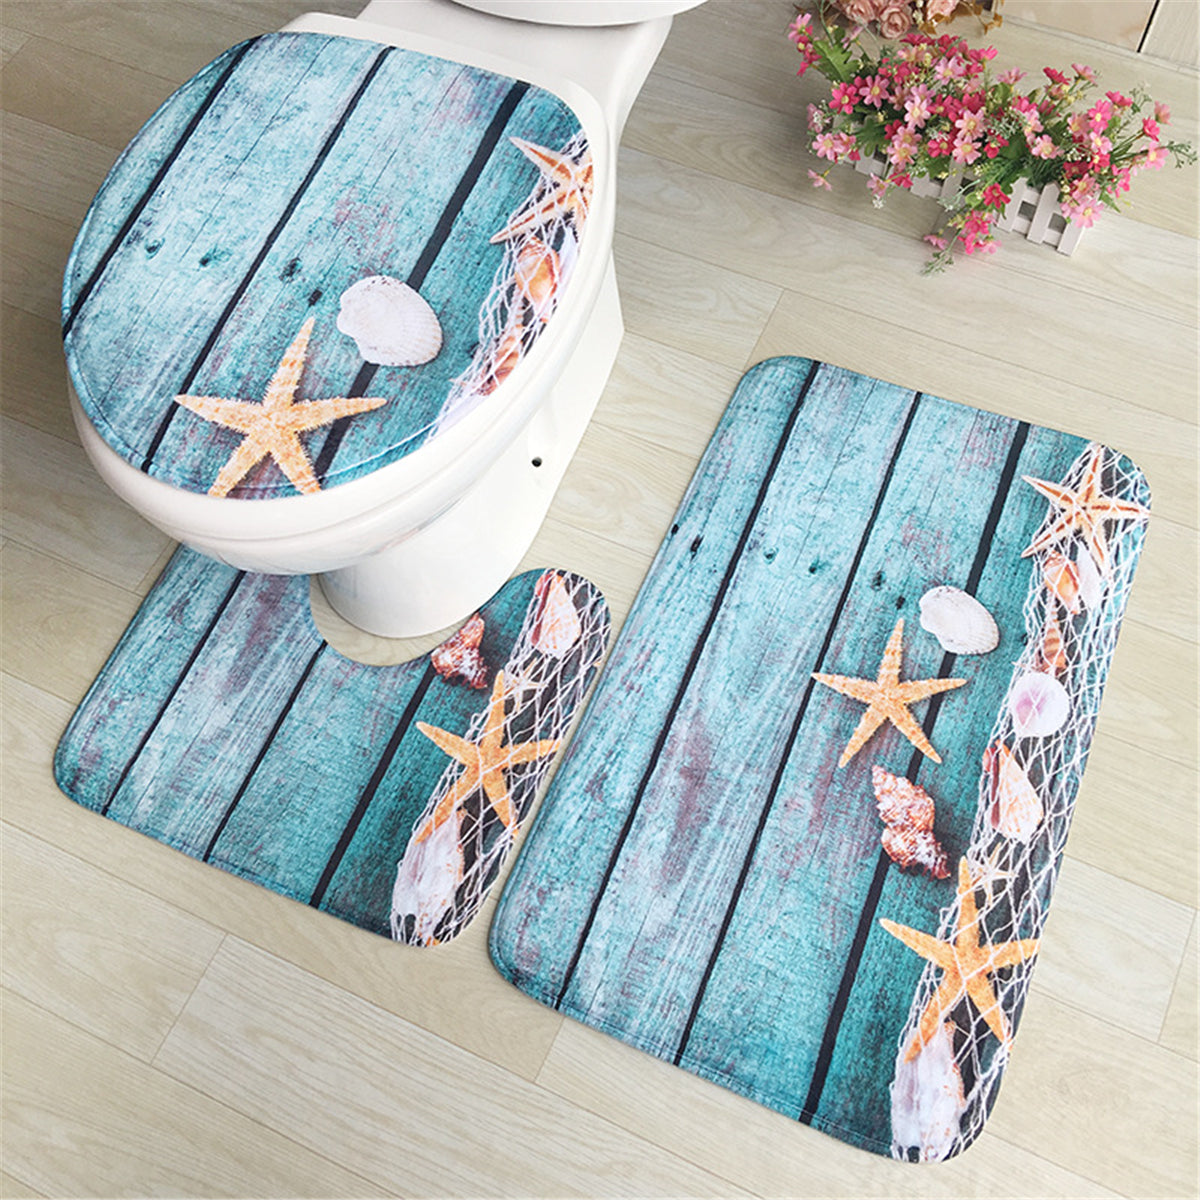 Flannel 3D Digital Printing Floor Mat Anti-Slip Floor Mat Bathroom Pedestal Rug Toilet Lid Cover Floor Mat Bath Mat for Home Decoration